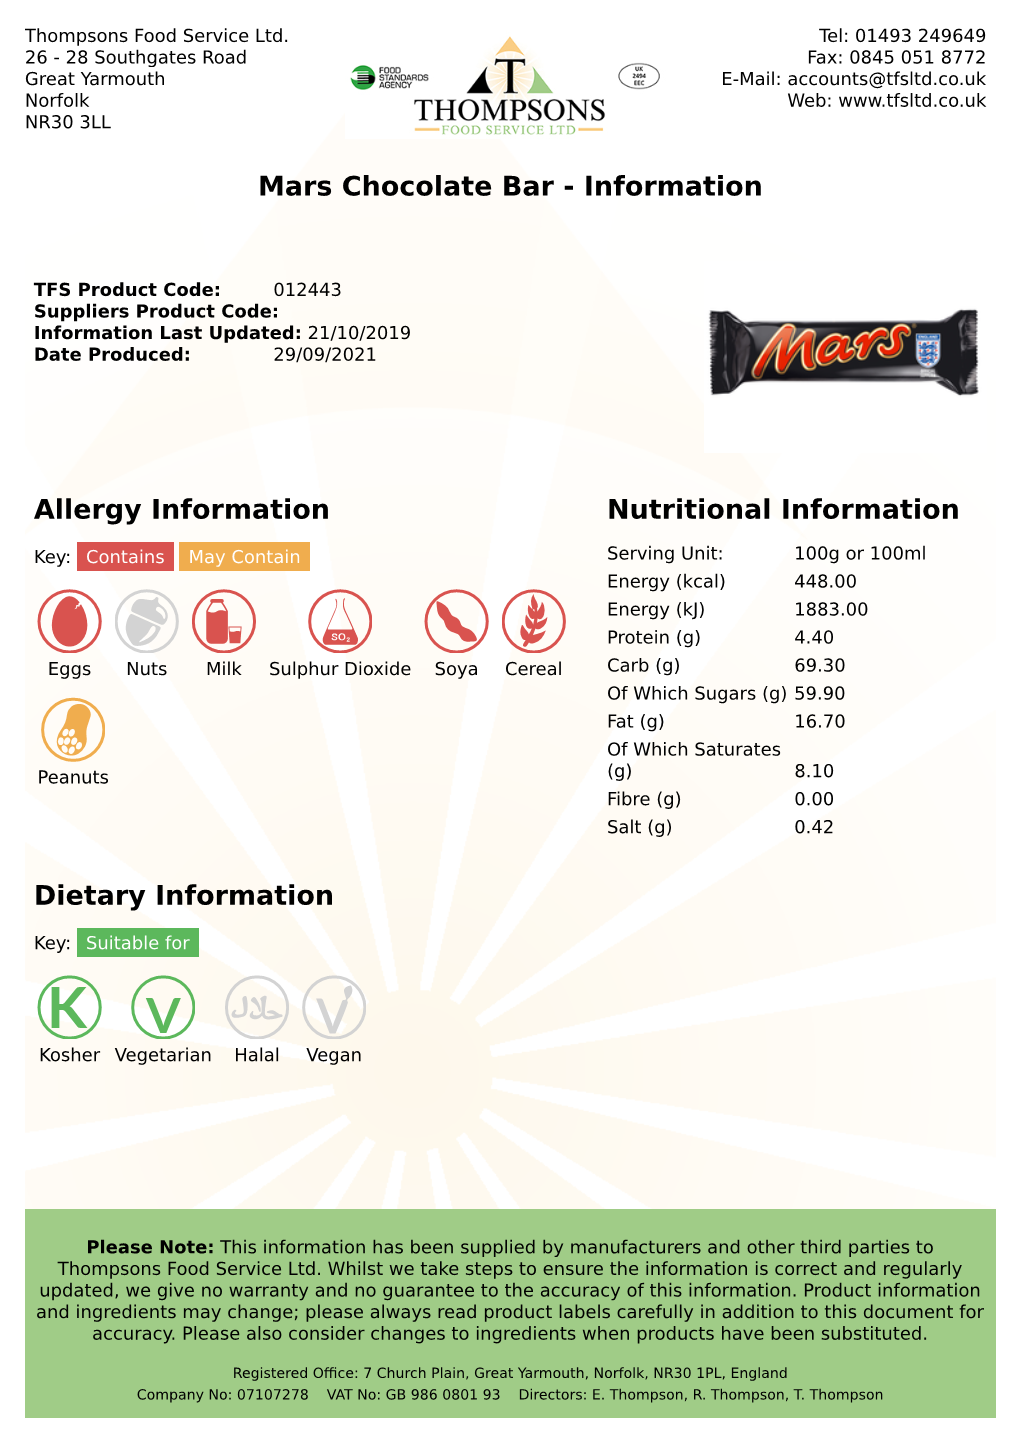 Mars Chocolate Bar - Information